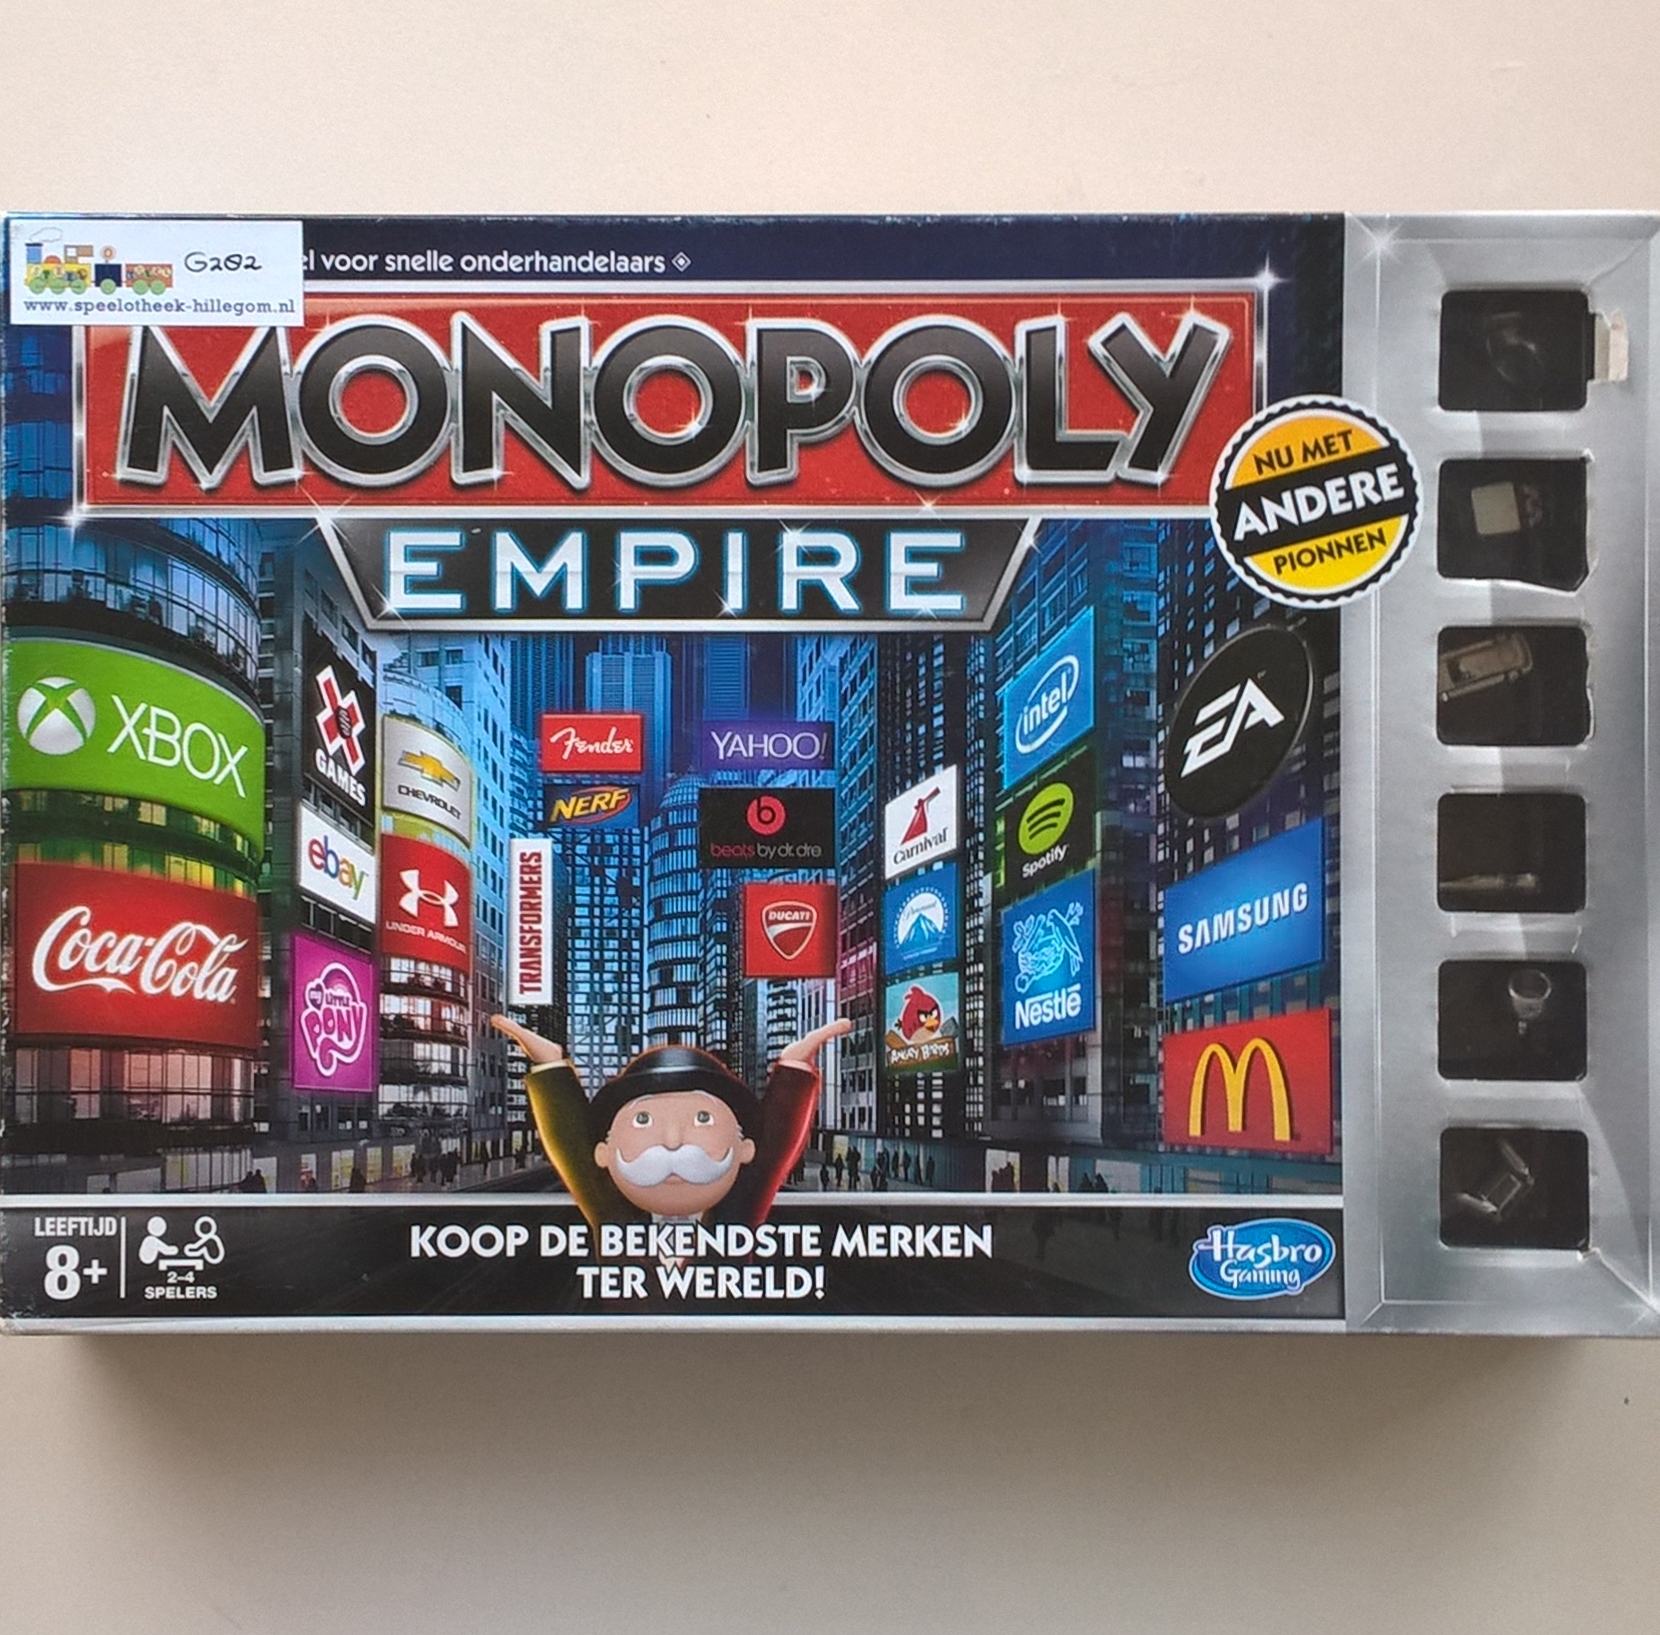 Monopoly Empire Speel-o-Theek Hillegom